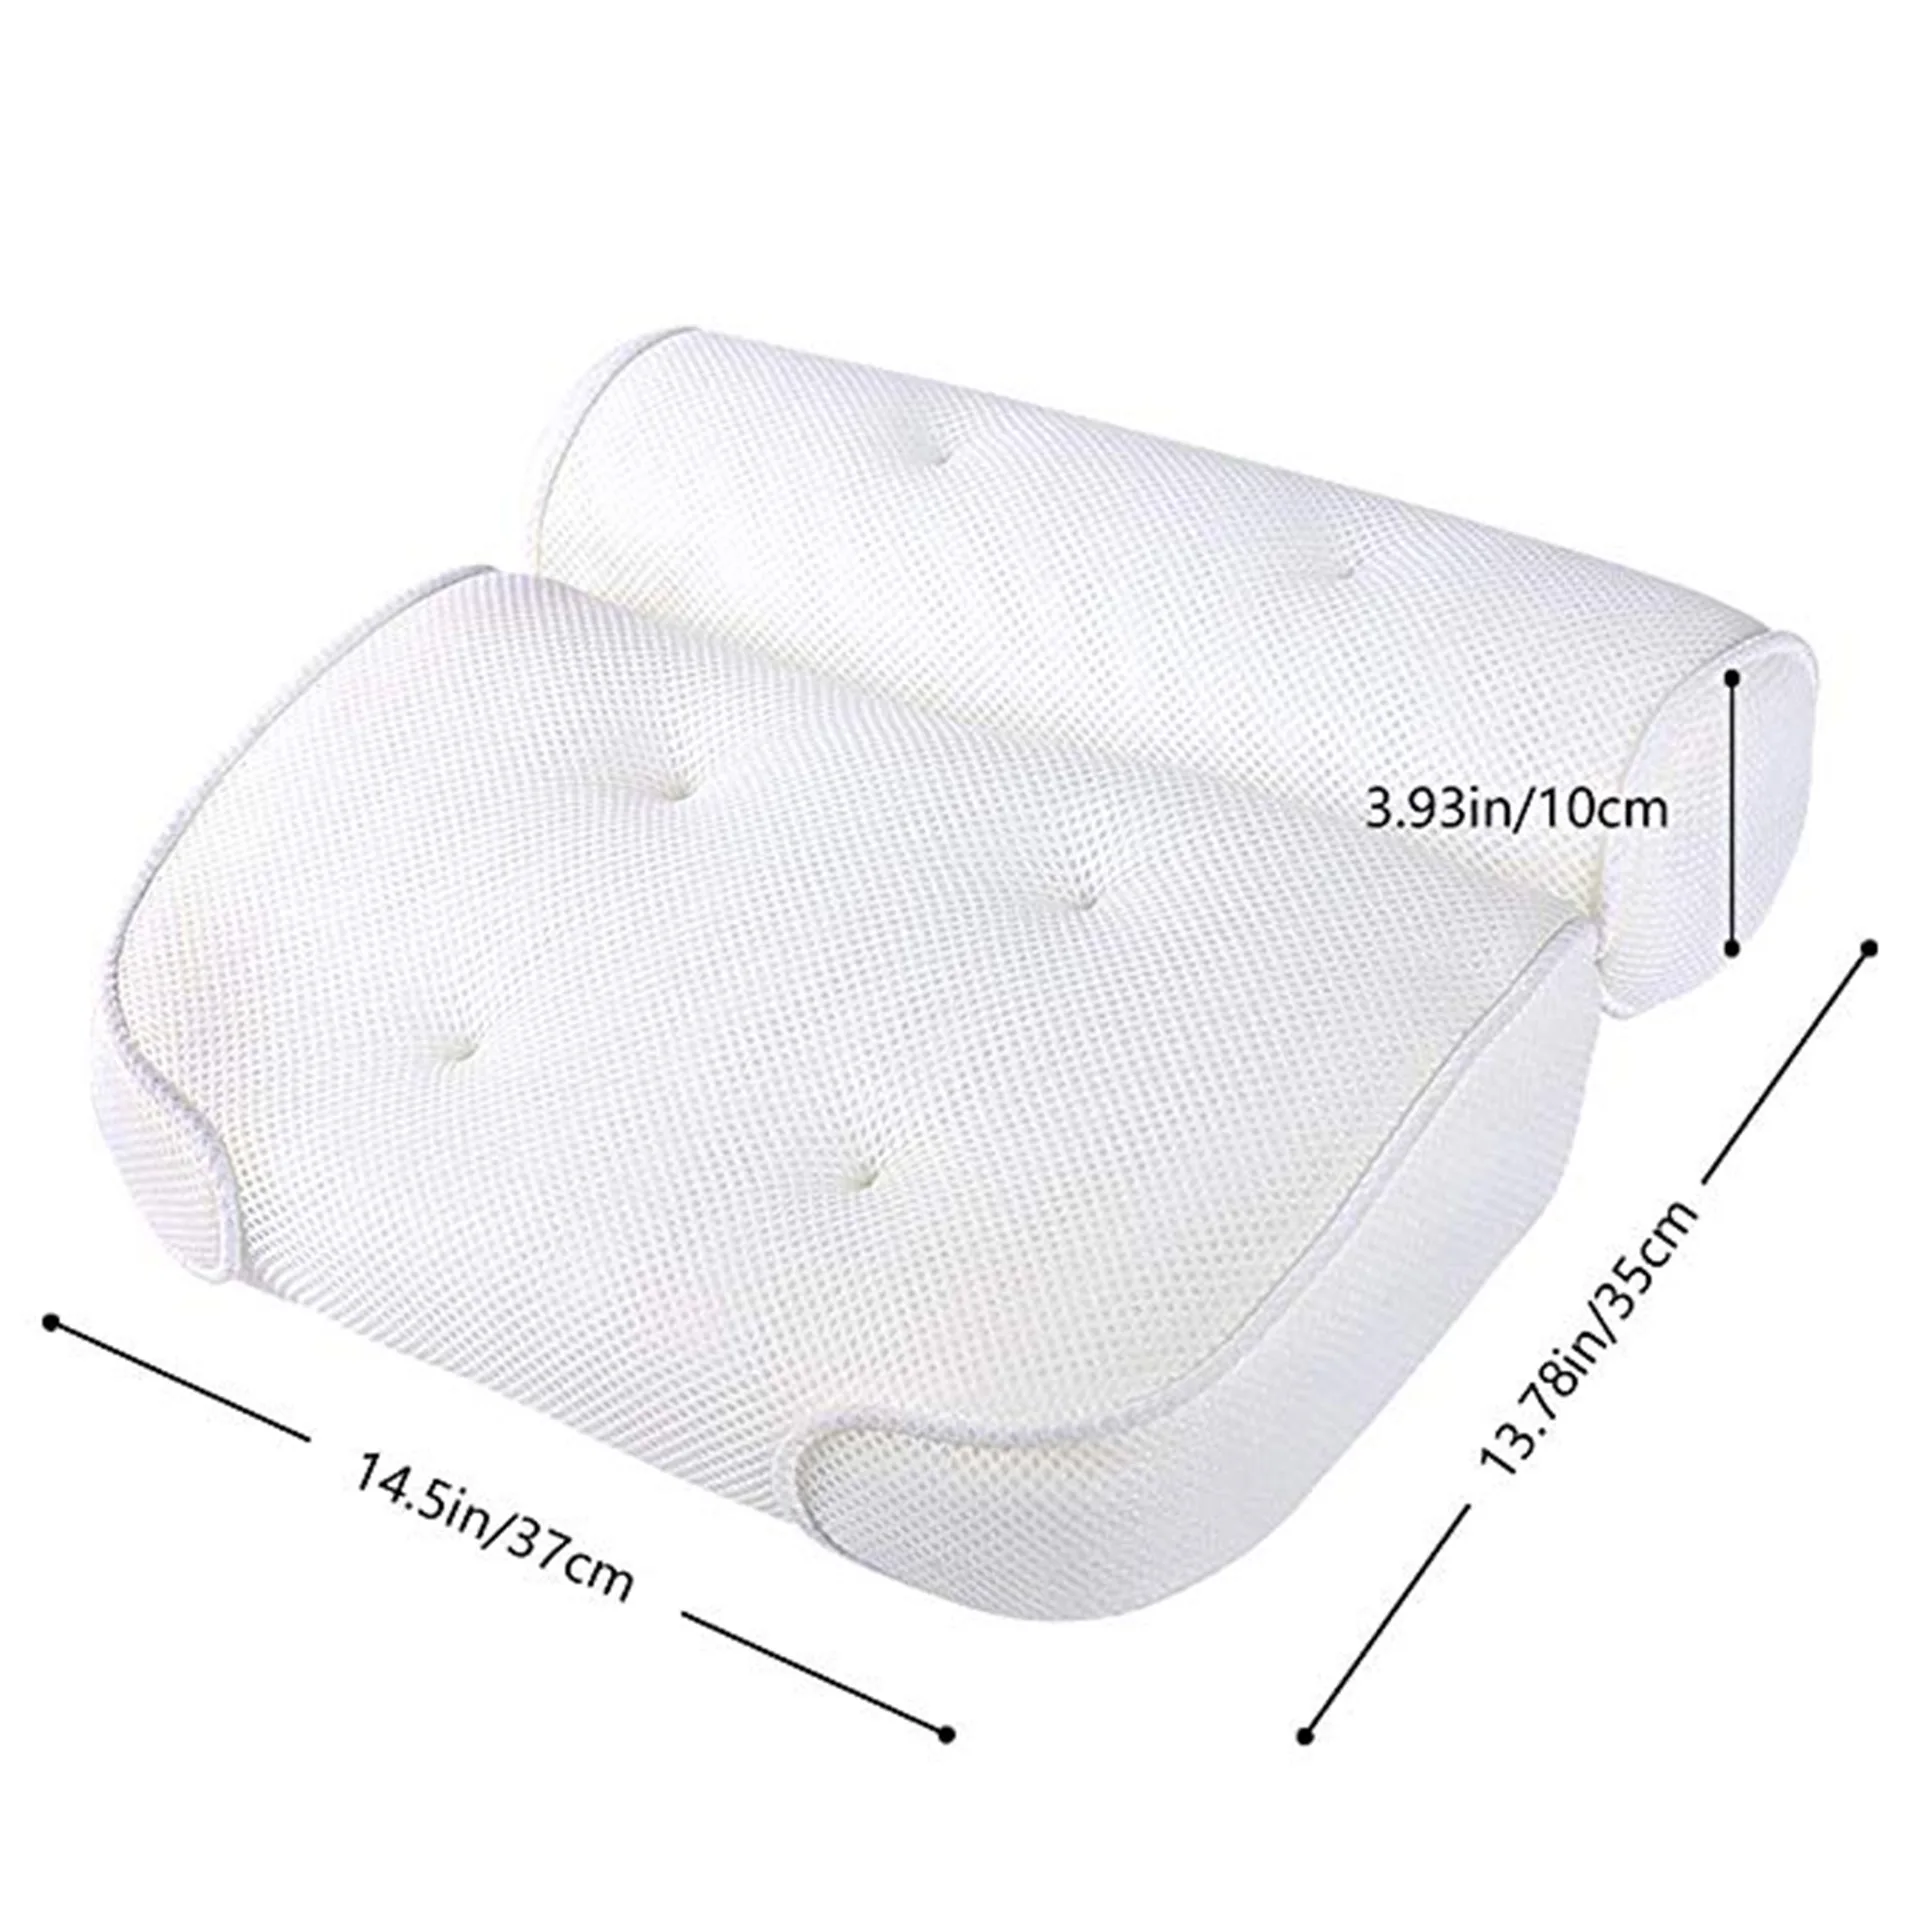 

Bathtub pillow for neck and shoulder spa bathroom accessories bath pillow bathtub with suction cups luxury headrest bath cushion, White,accept custom colors